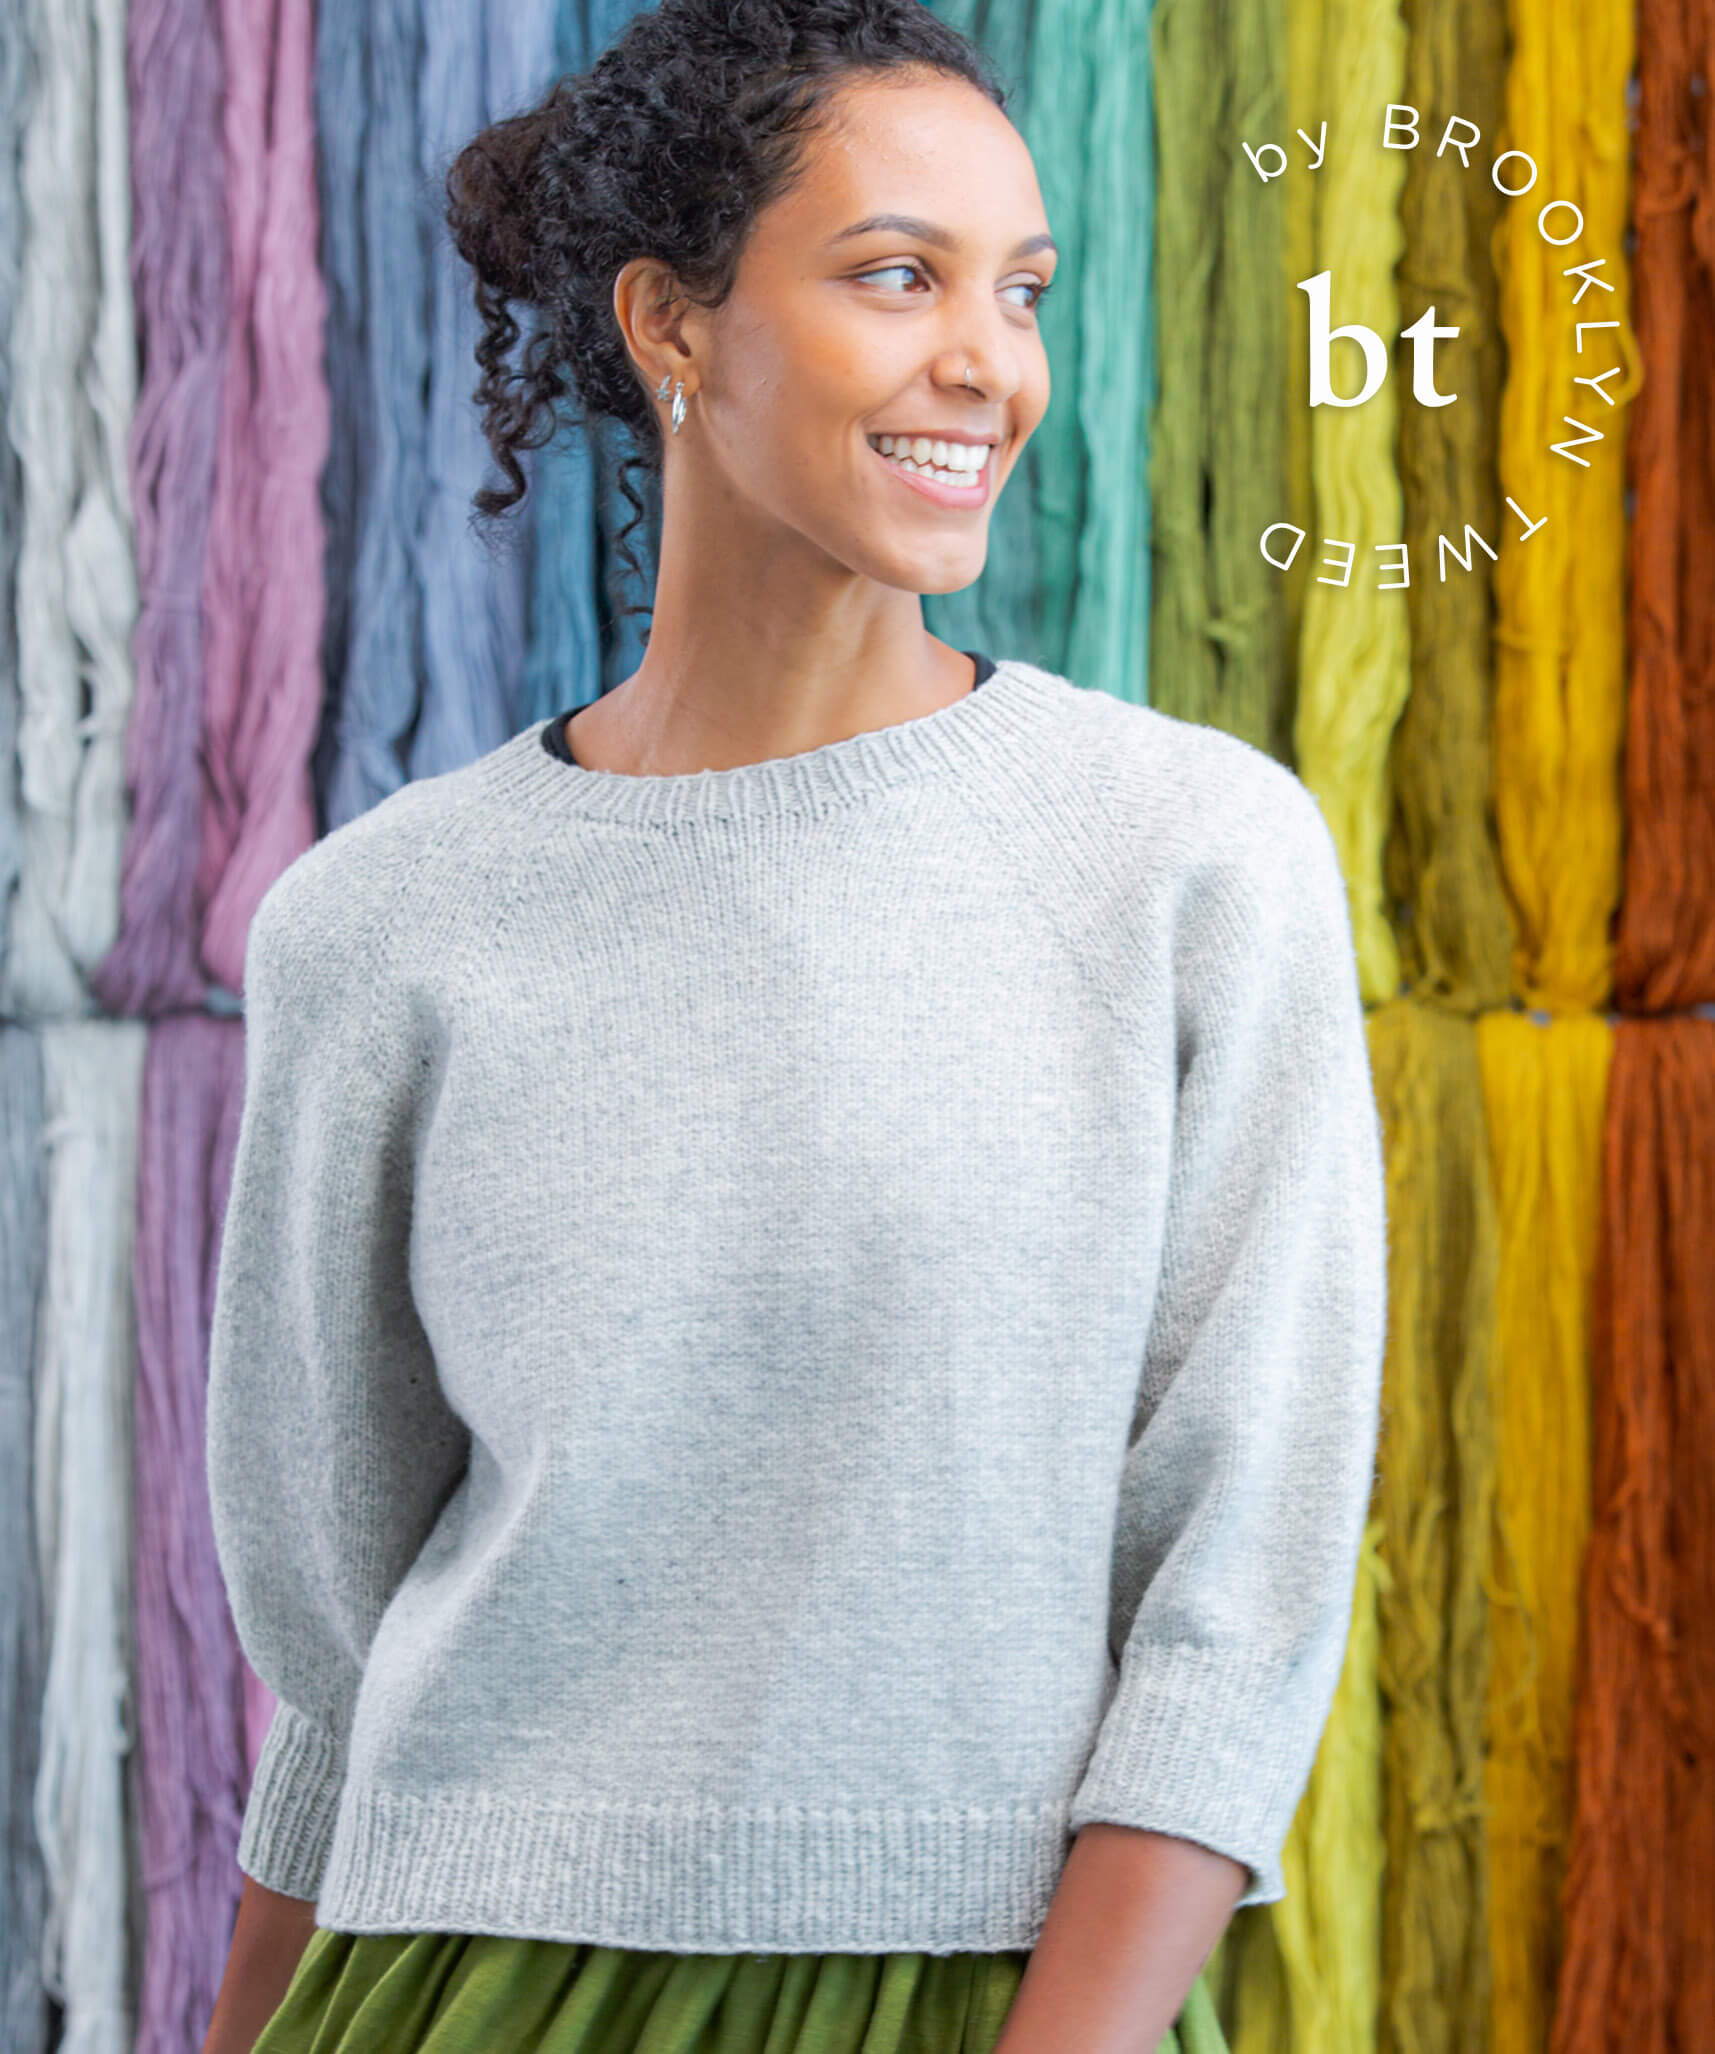 First Raglan Sweater | Beginner-Friendly Knitting Pattern | BT by Brooklyn Tweed